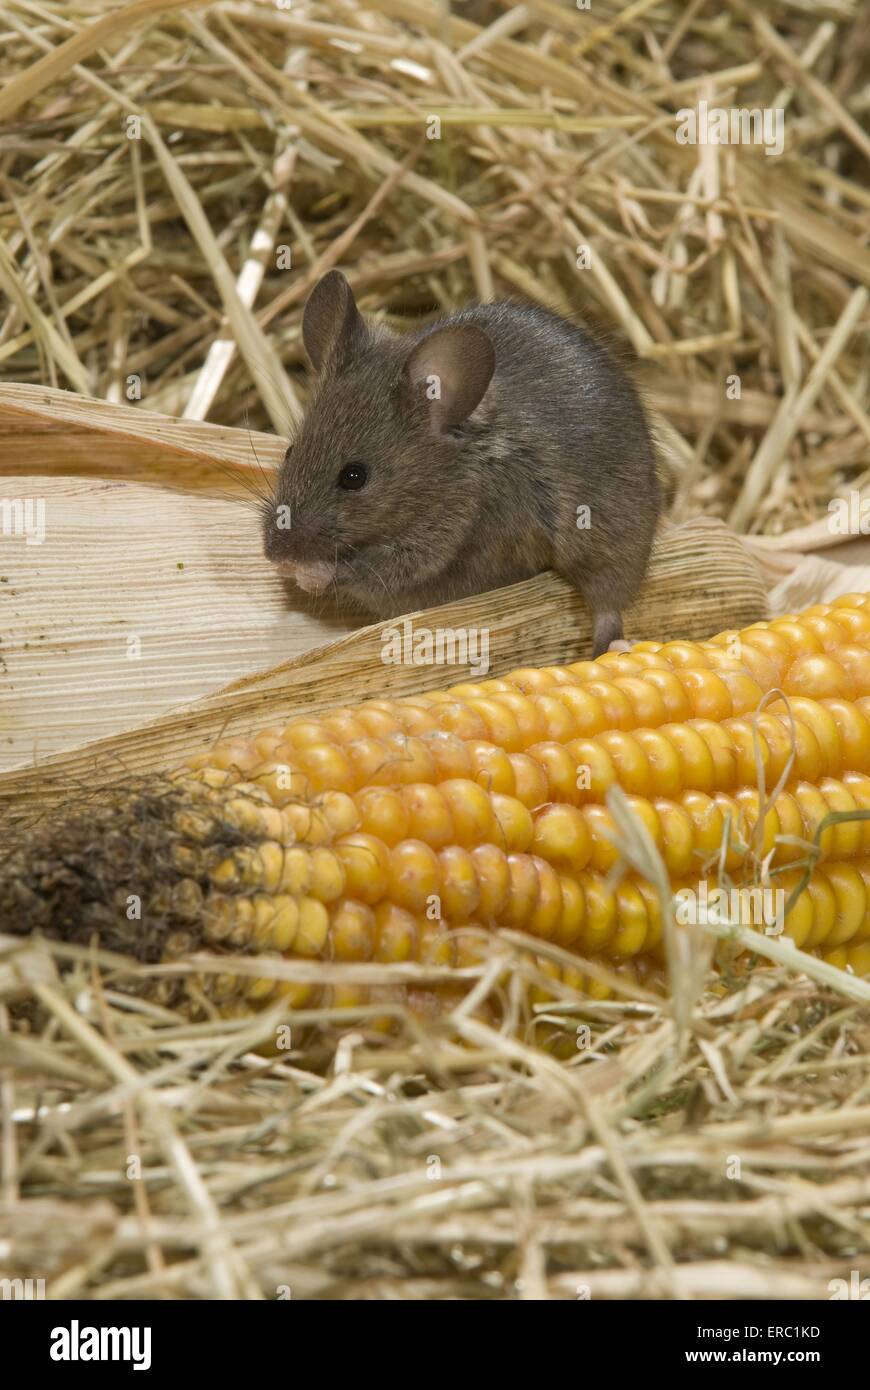 mouse eats corncob Stock Photo